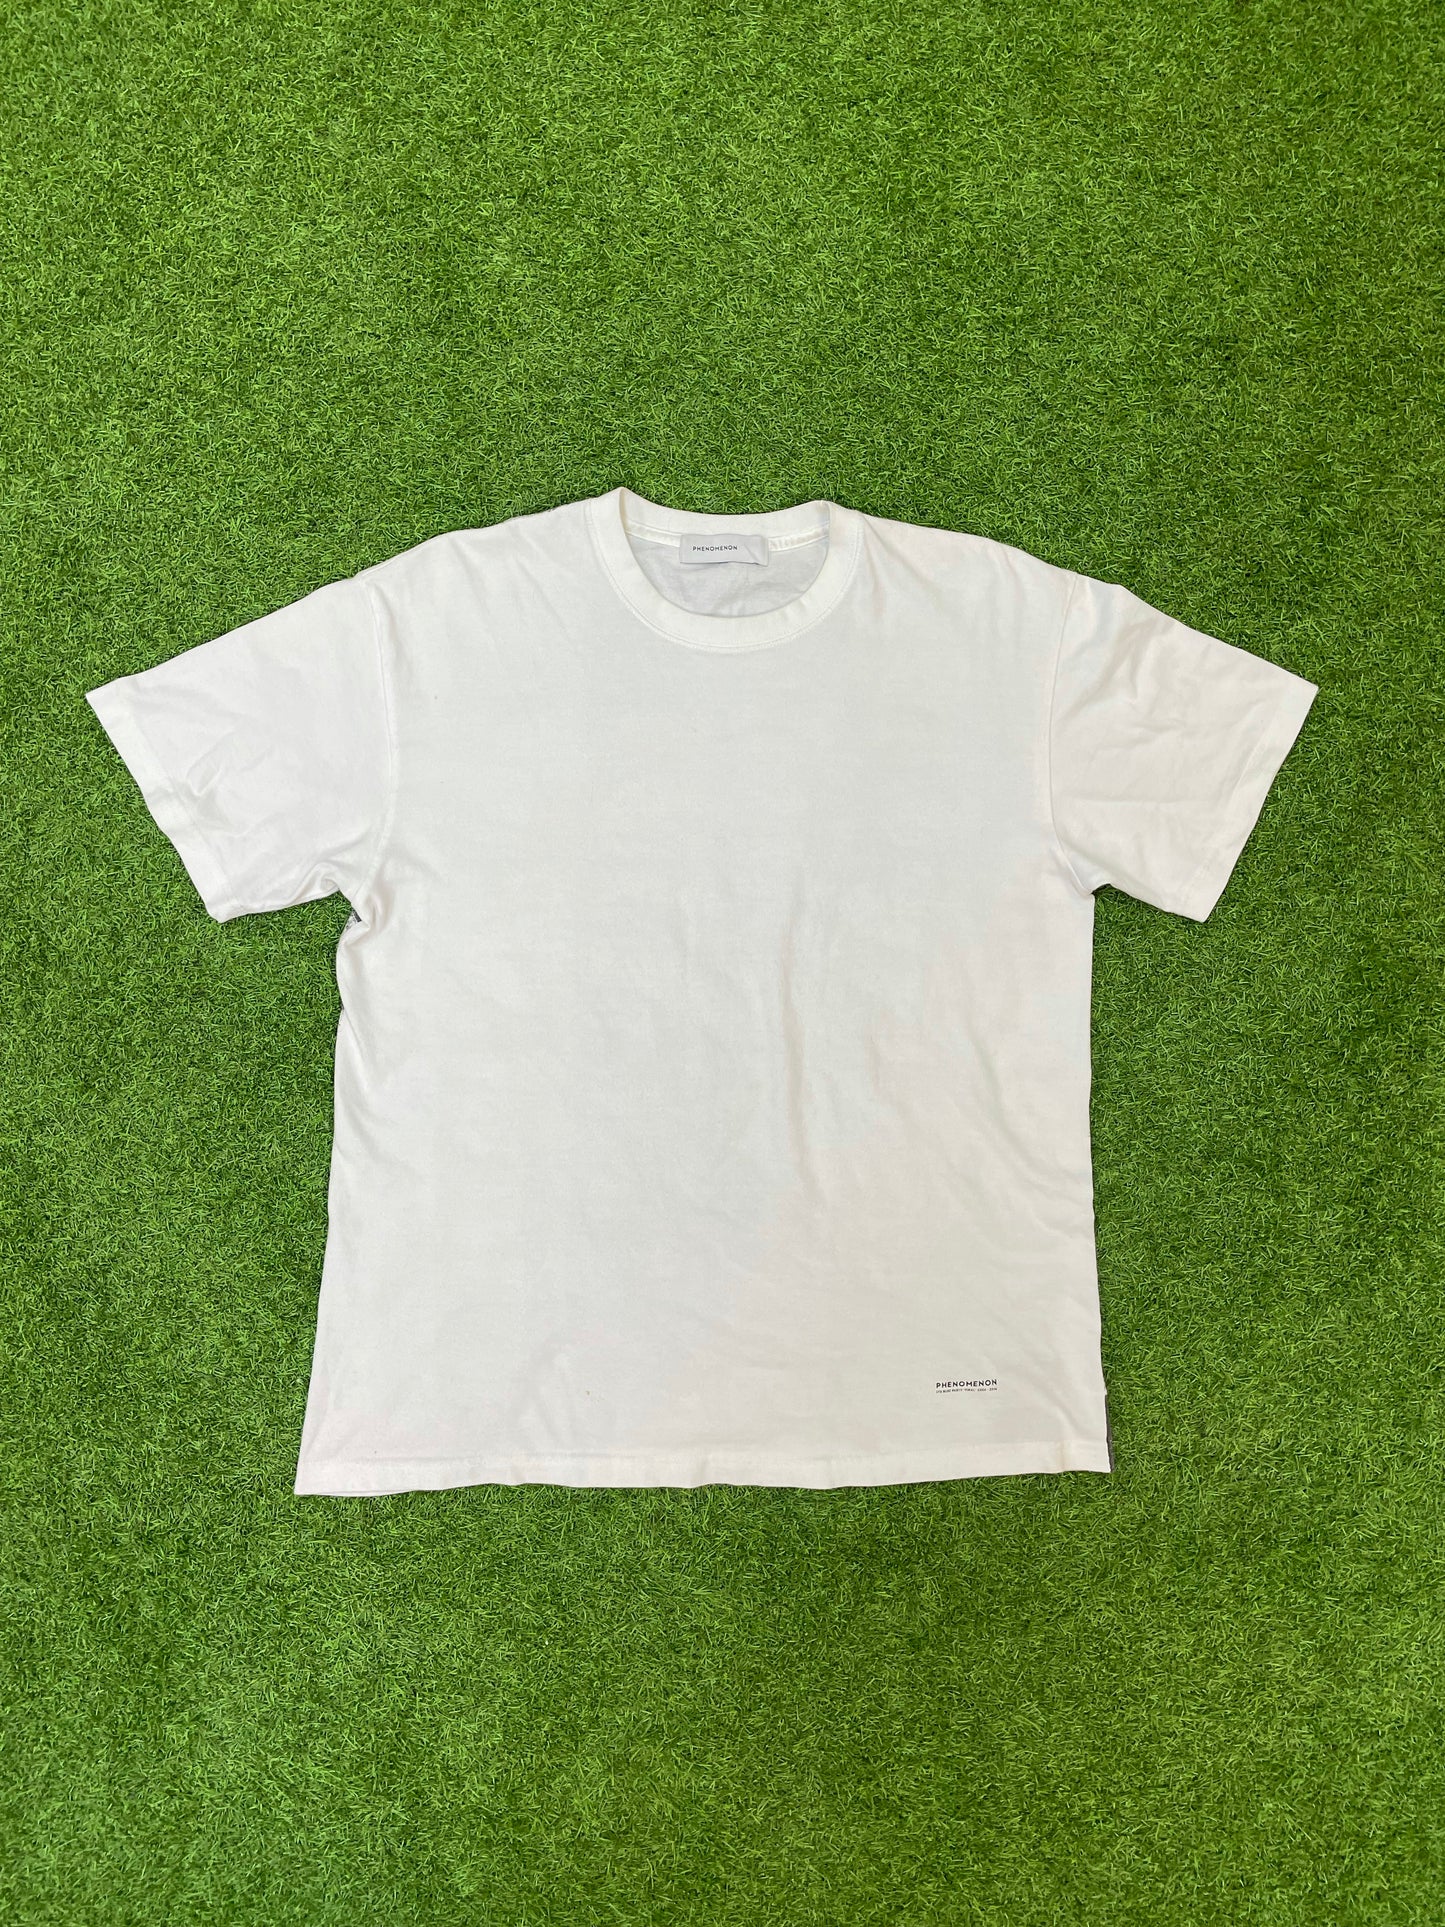 SS2016 Phenomenon Multi-Pocket "MA-1" T-Shirt